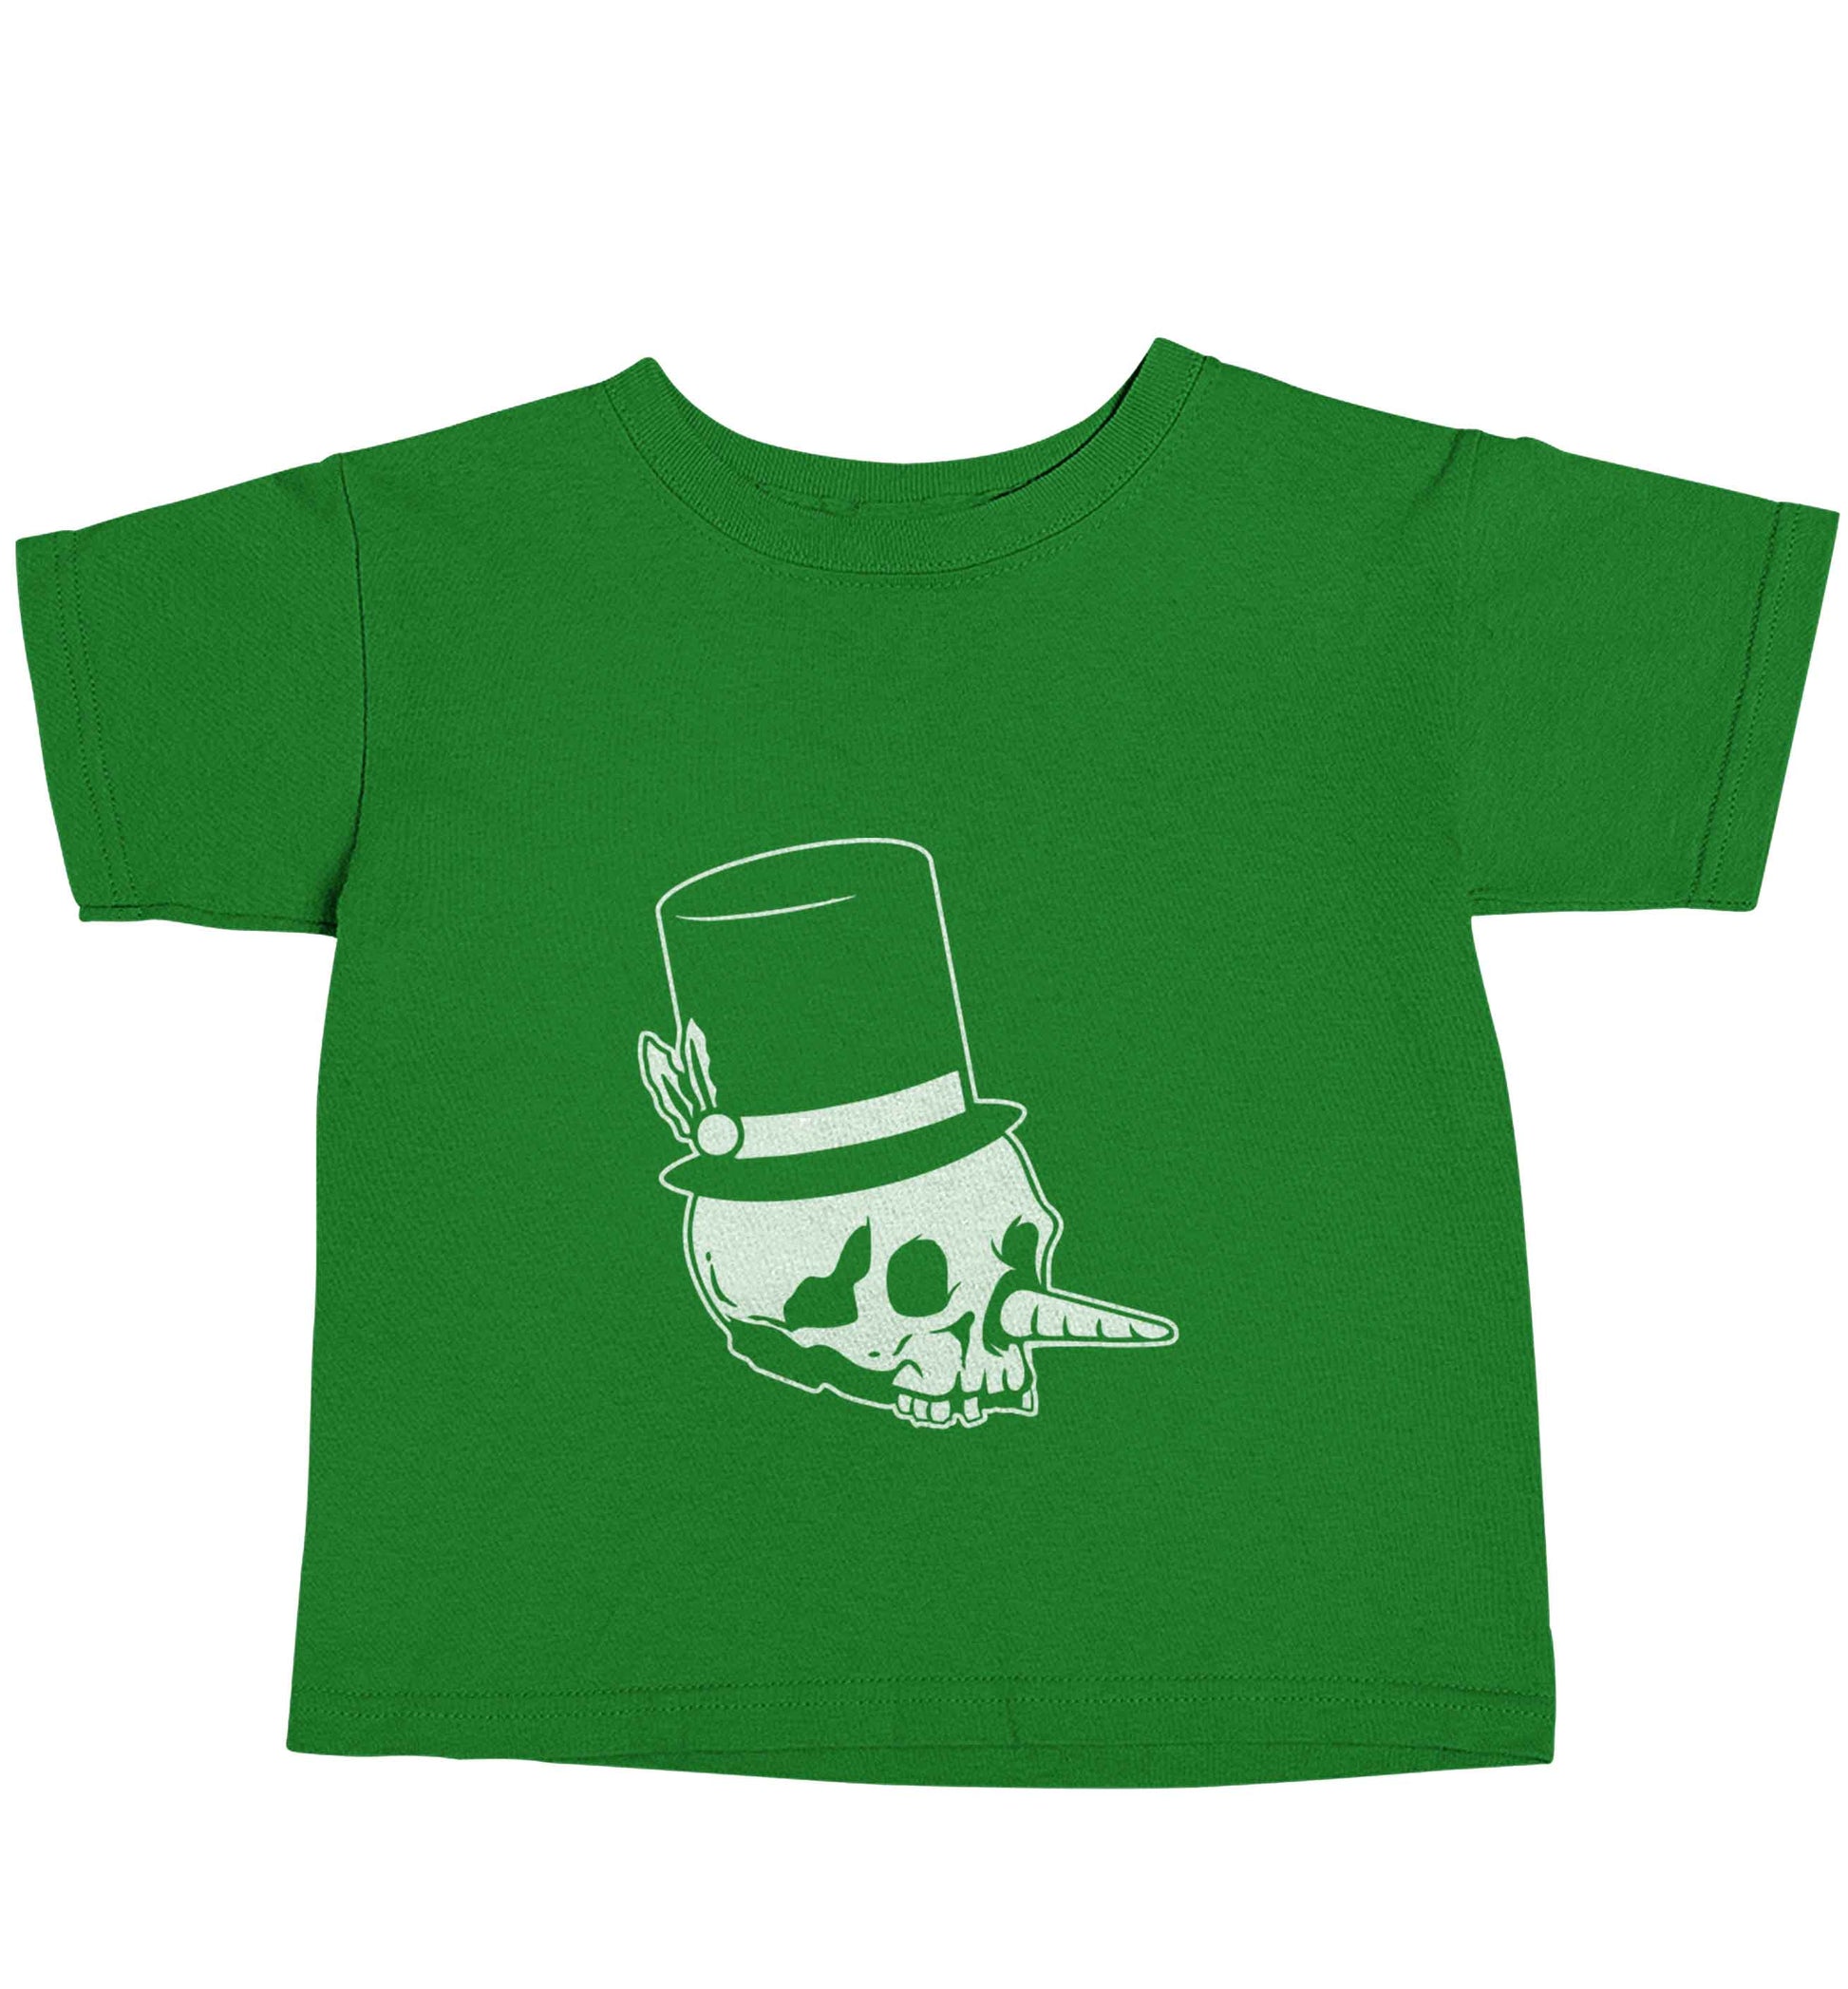 Snowman punk green baby toddler Tshirt 2 Years